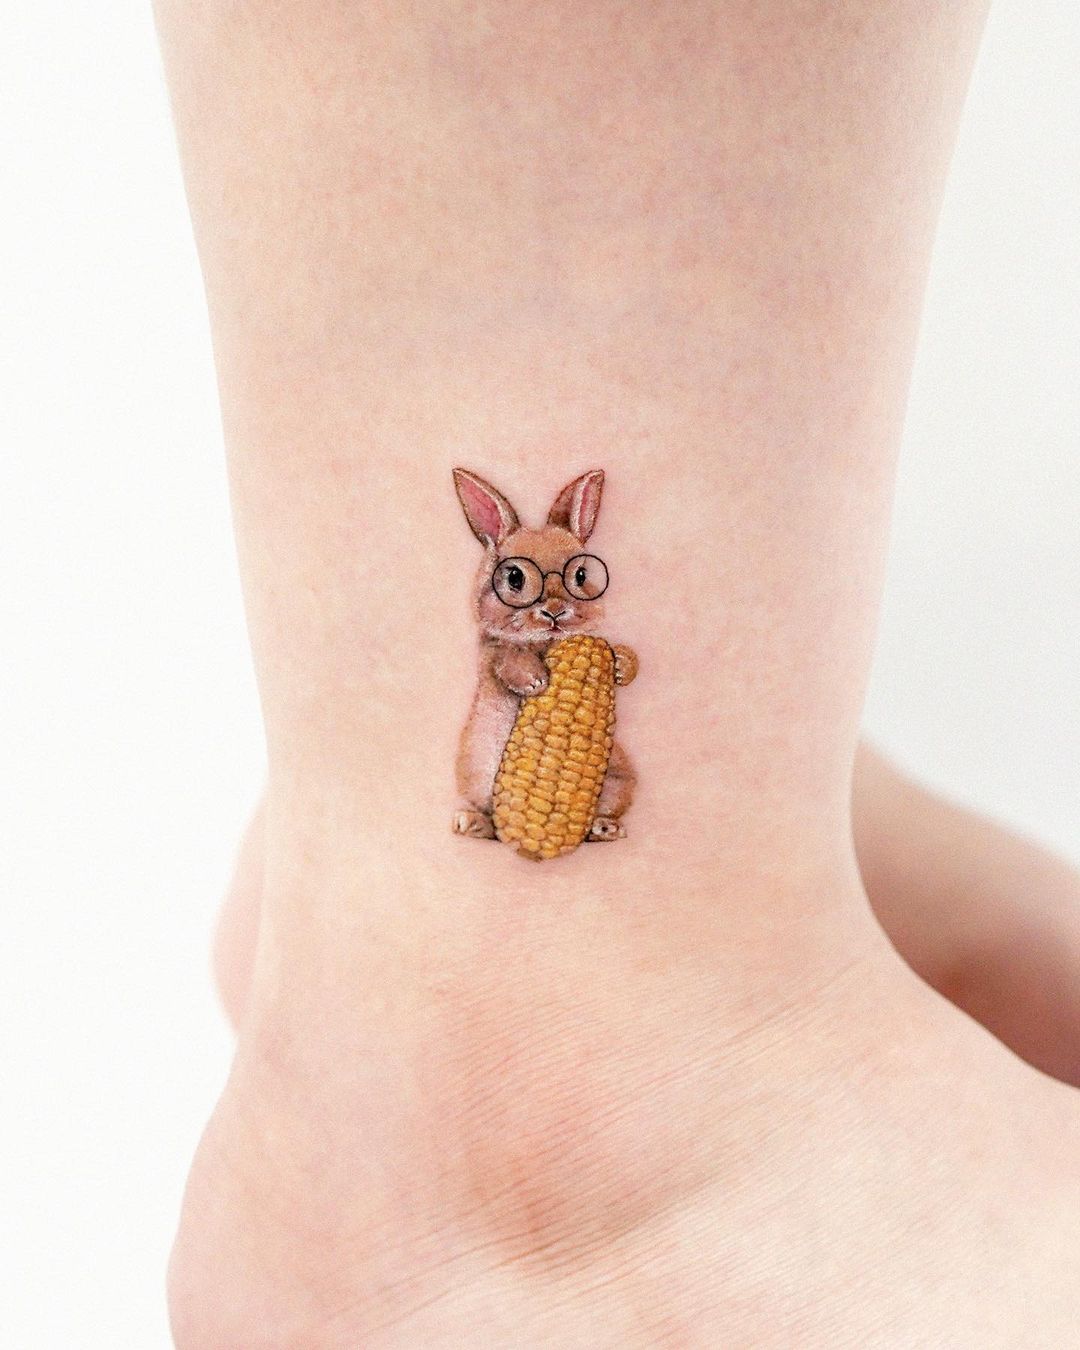 ArtStation - Rabbit tattoo design